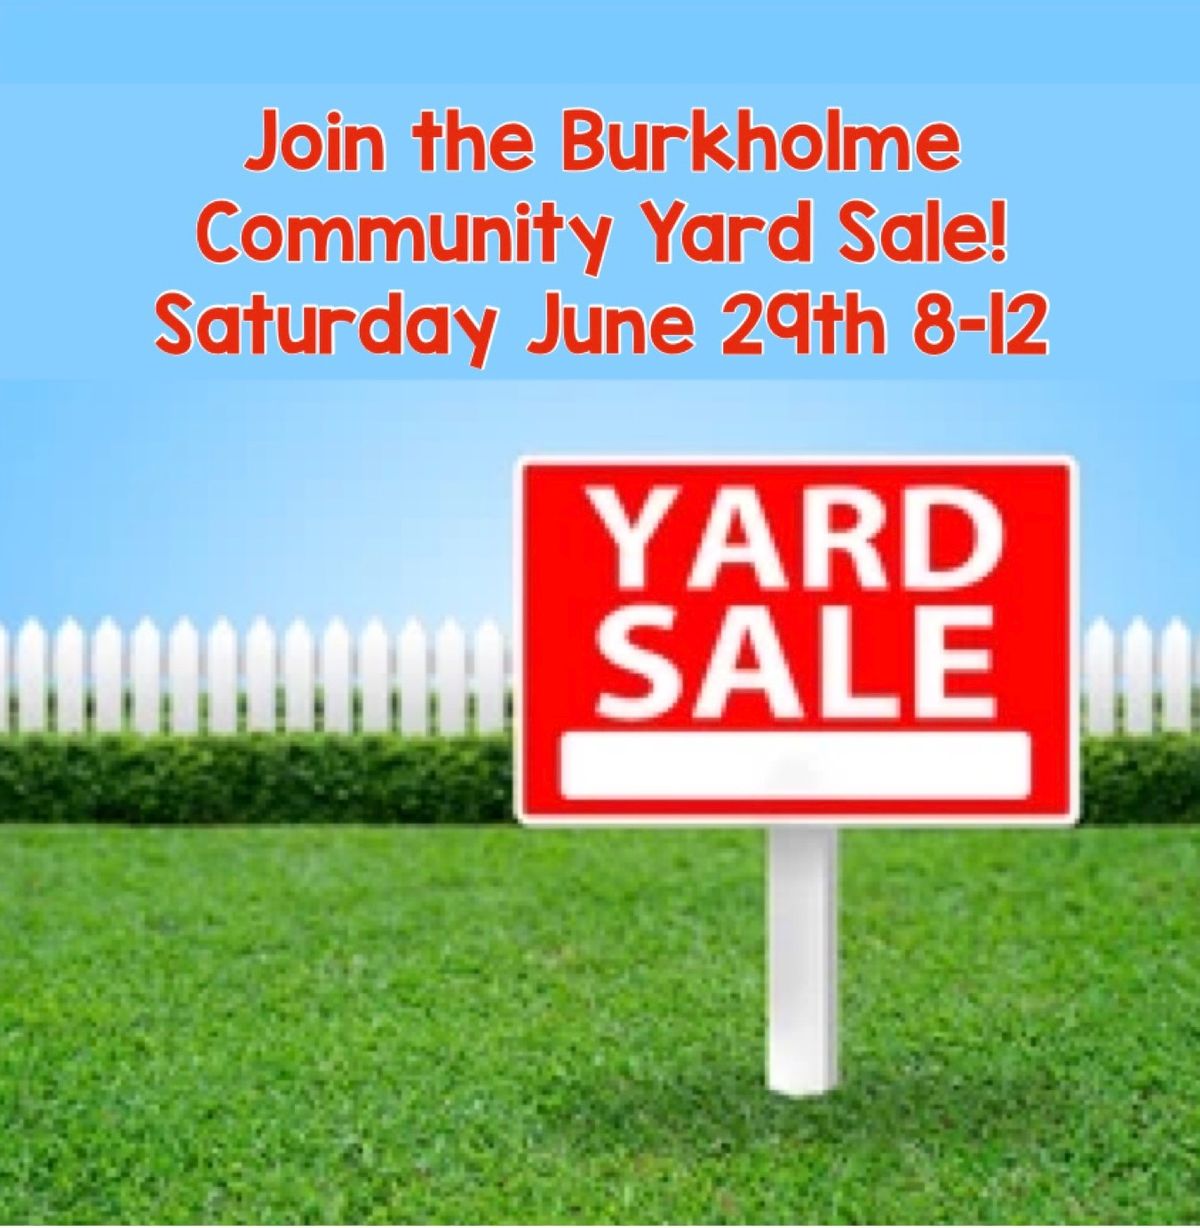 Burkholme (aka Burkholder) Community Yard Sale